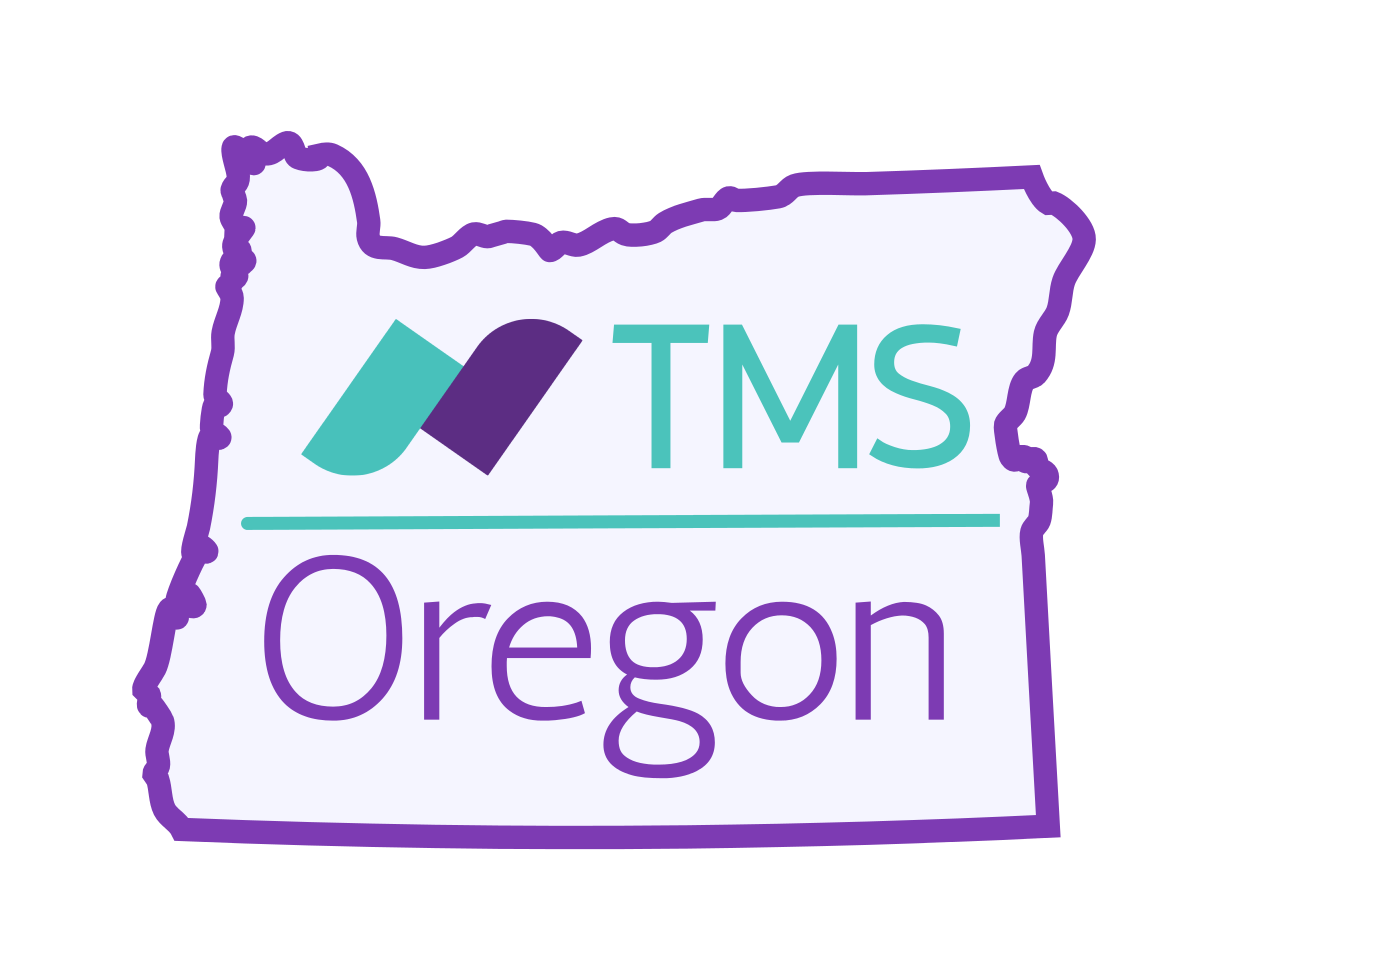 TMS Oregon - Dr. Liana Hategan MD PC logo